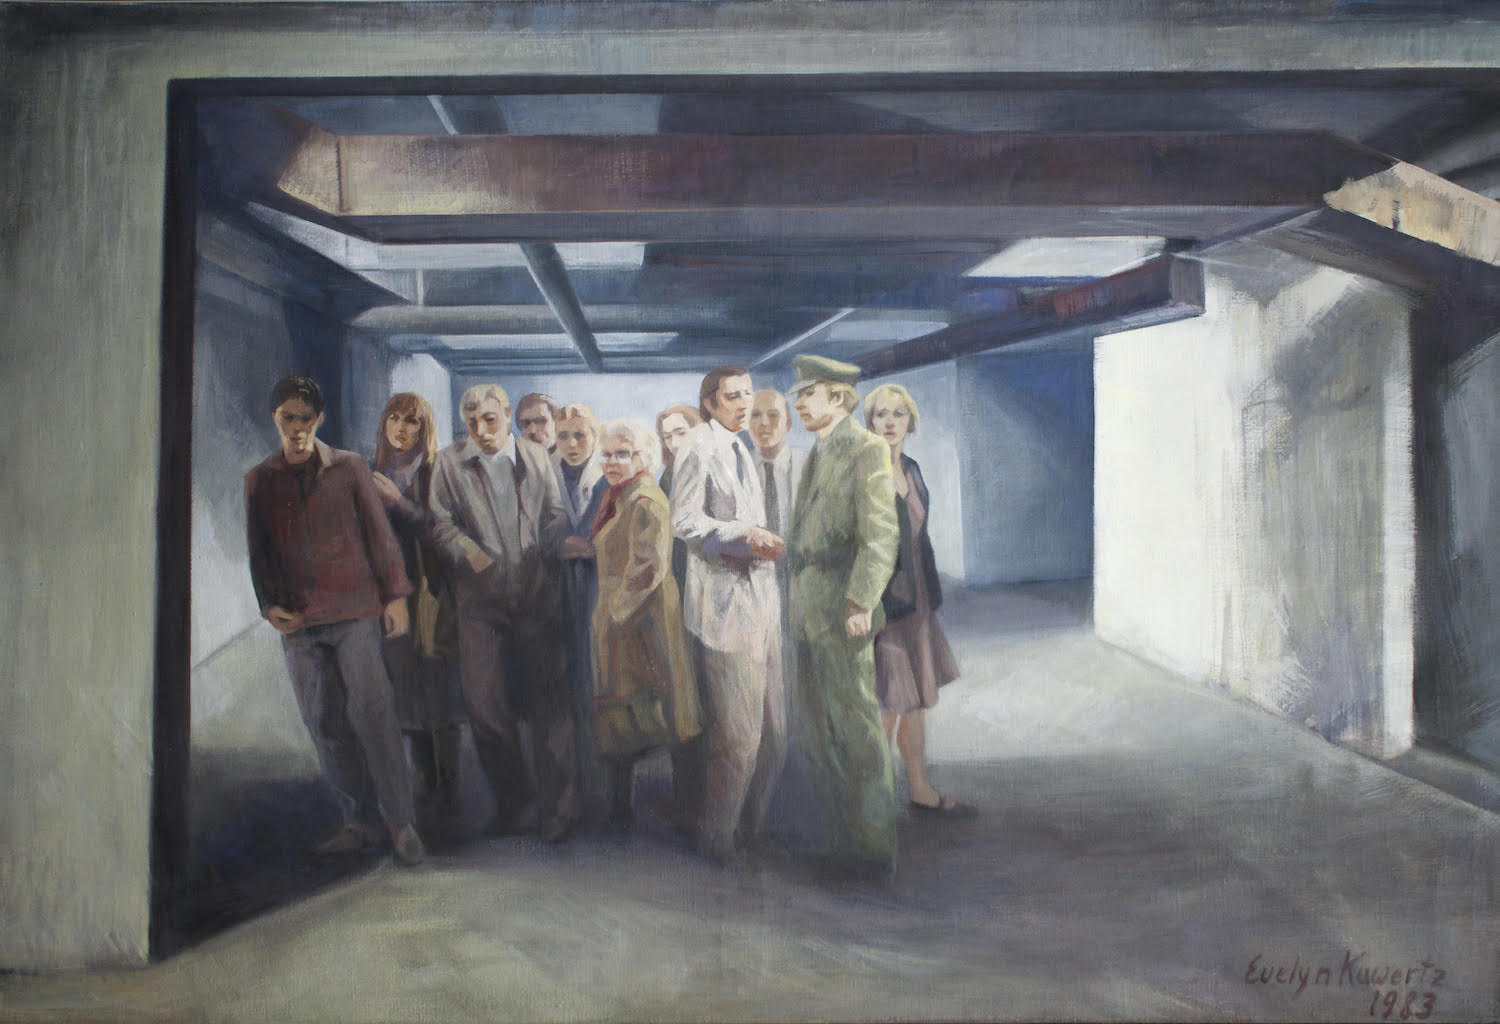 Bunker - Kudammkarree Berlin 1984, 188/144 cm, tempera, oil / canvas